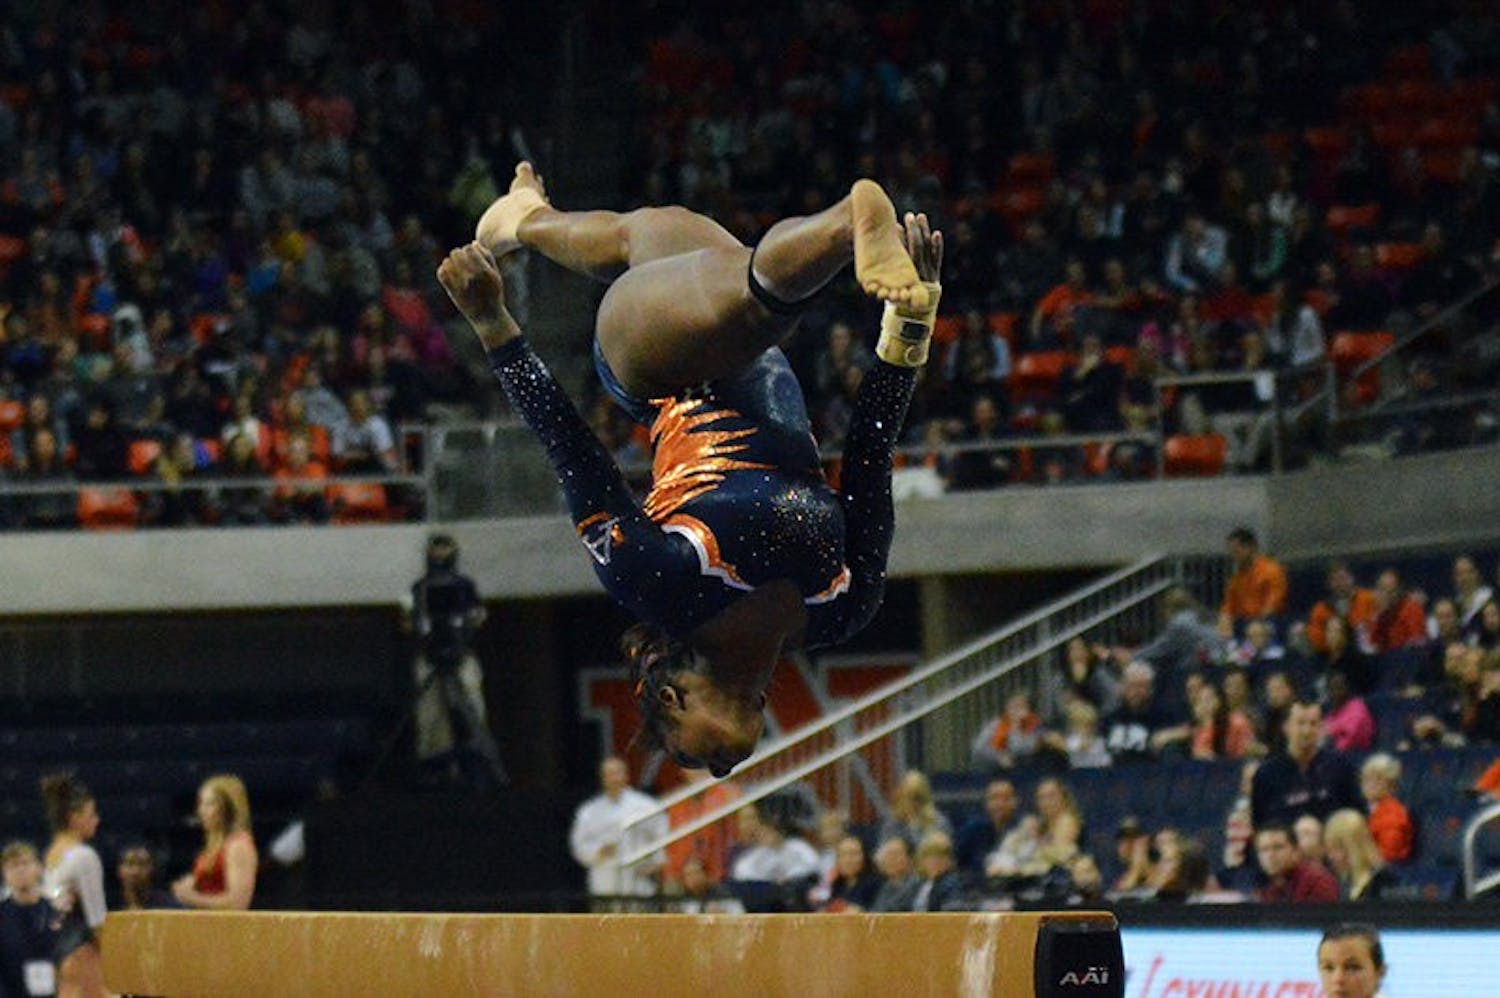 Bri Guy during her Beam routine. Auburn Gymnastics vs Arkansas in Auburn, AL on Jan 23, 2015. Emily Enfinger | PHOTO EDITOR